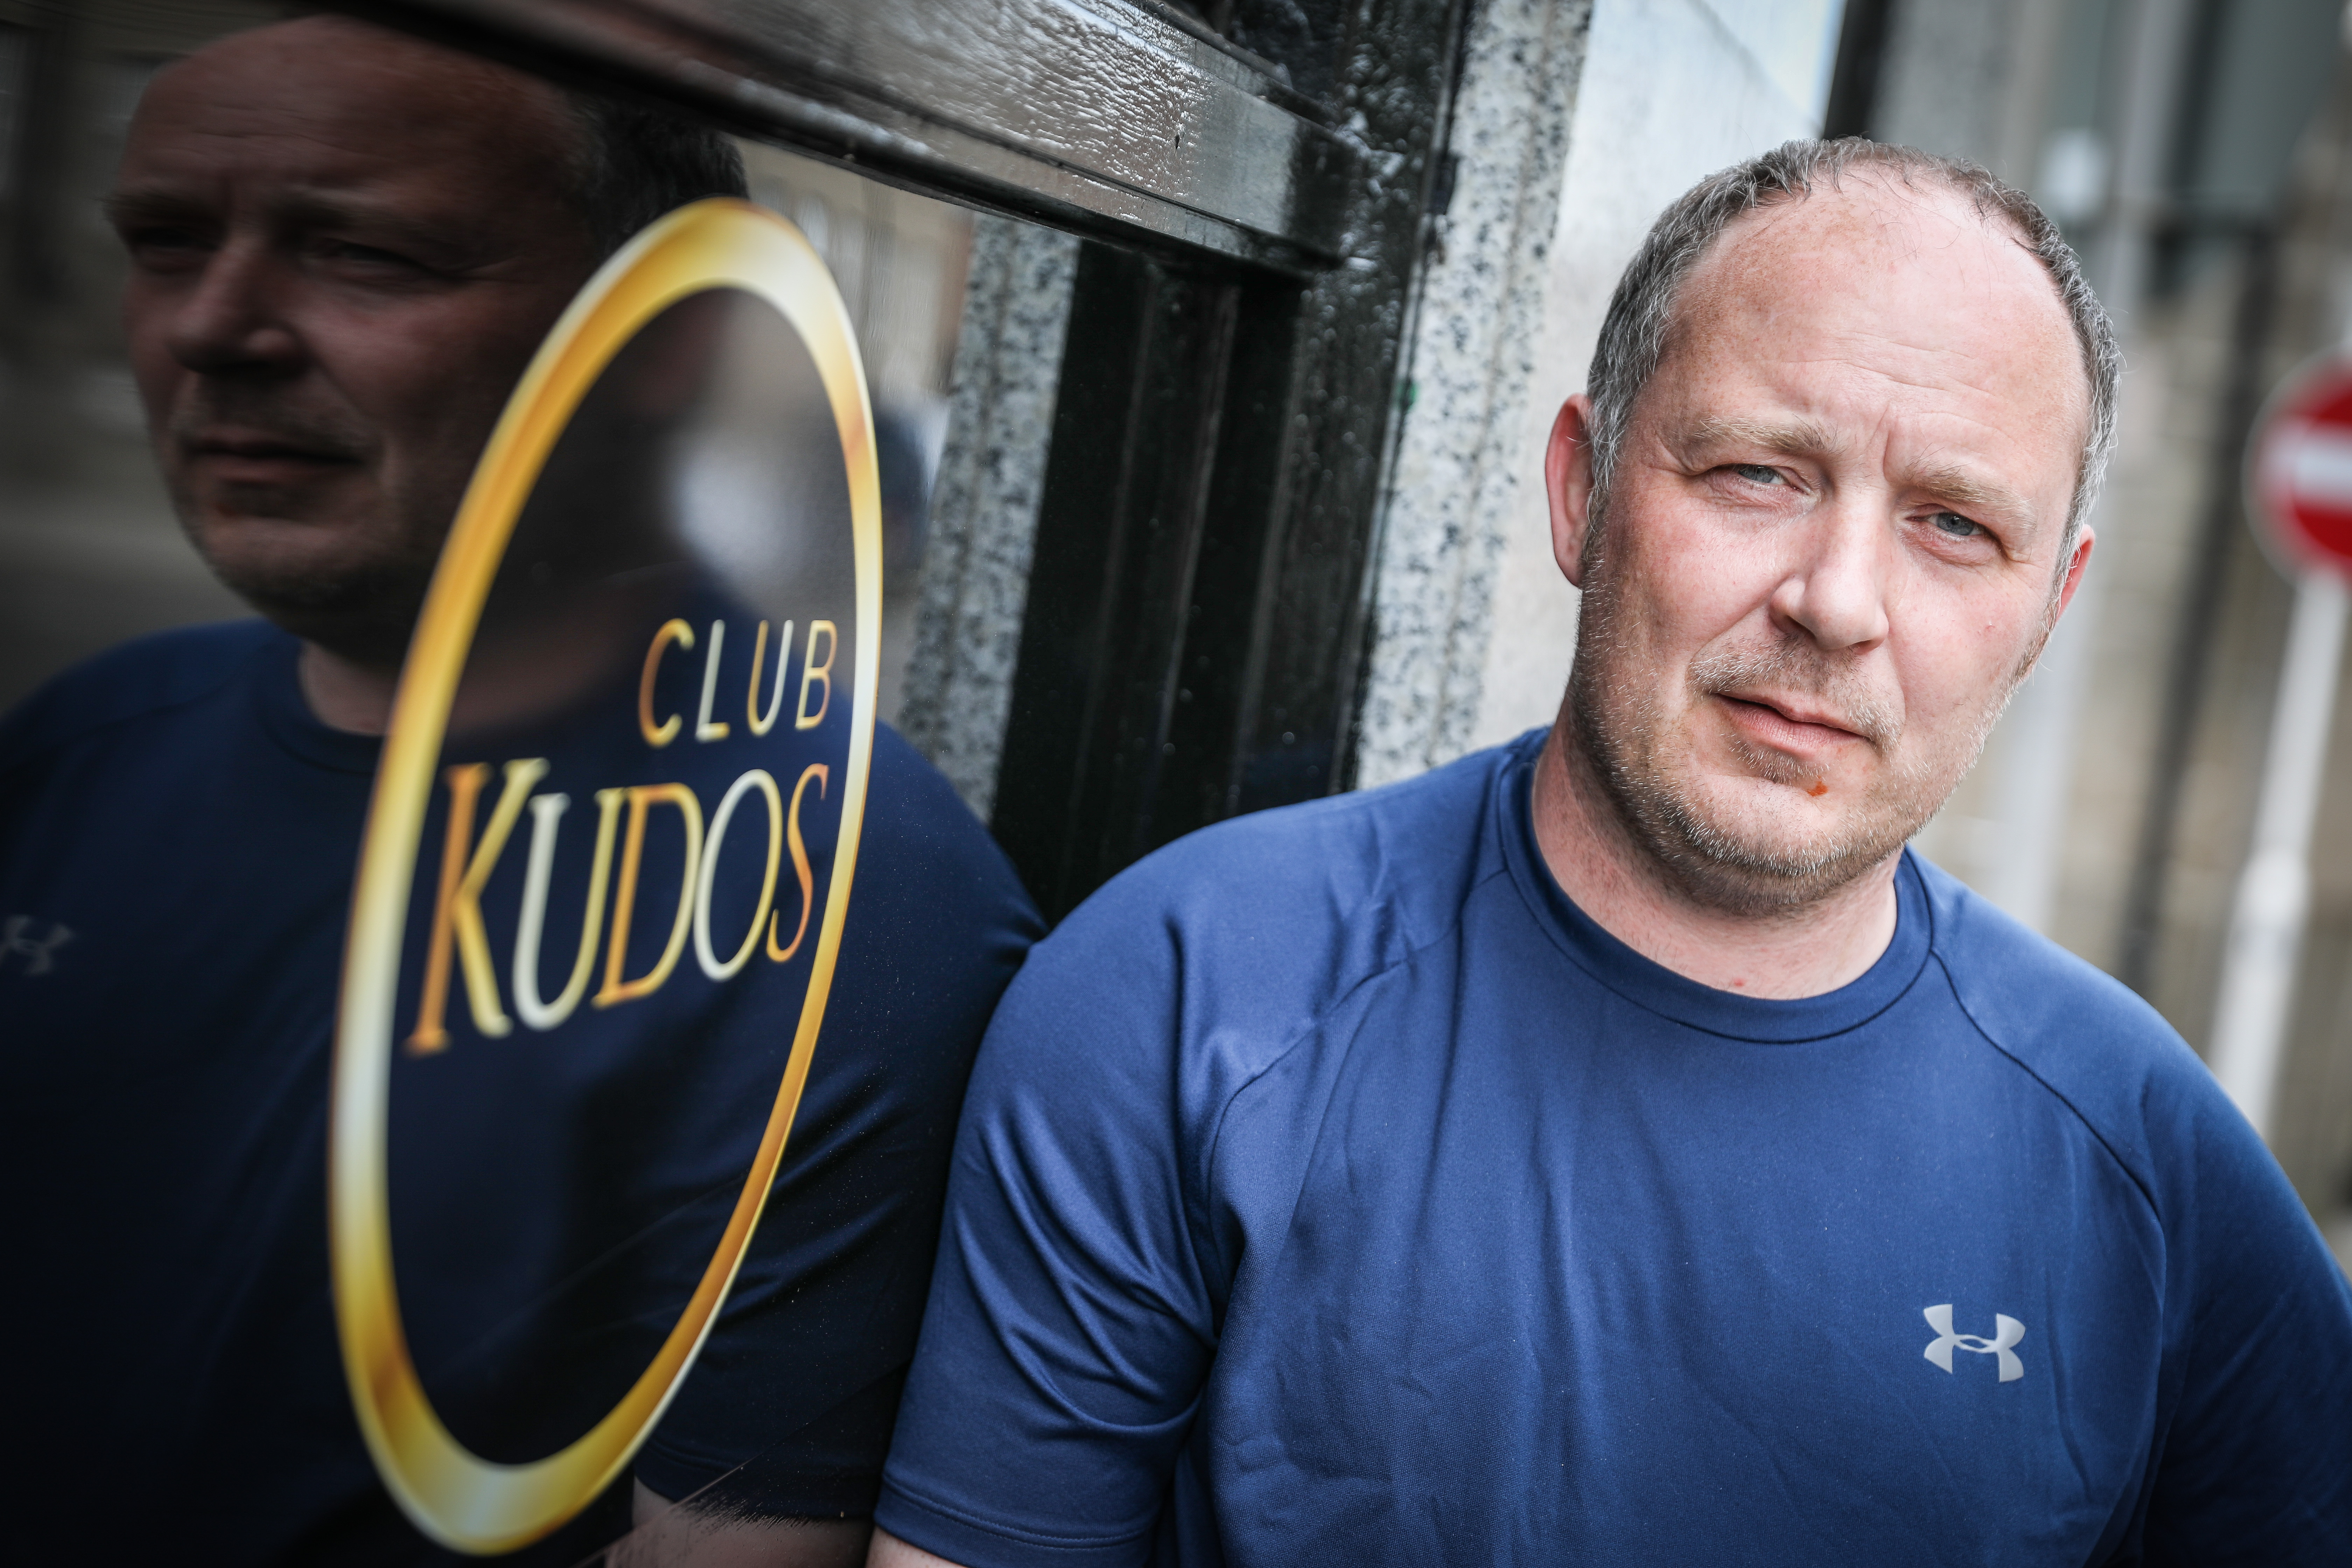 John Gibson outside Club Kudos.